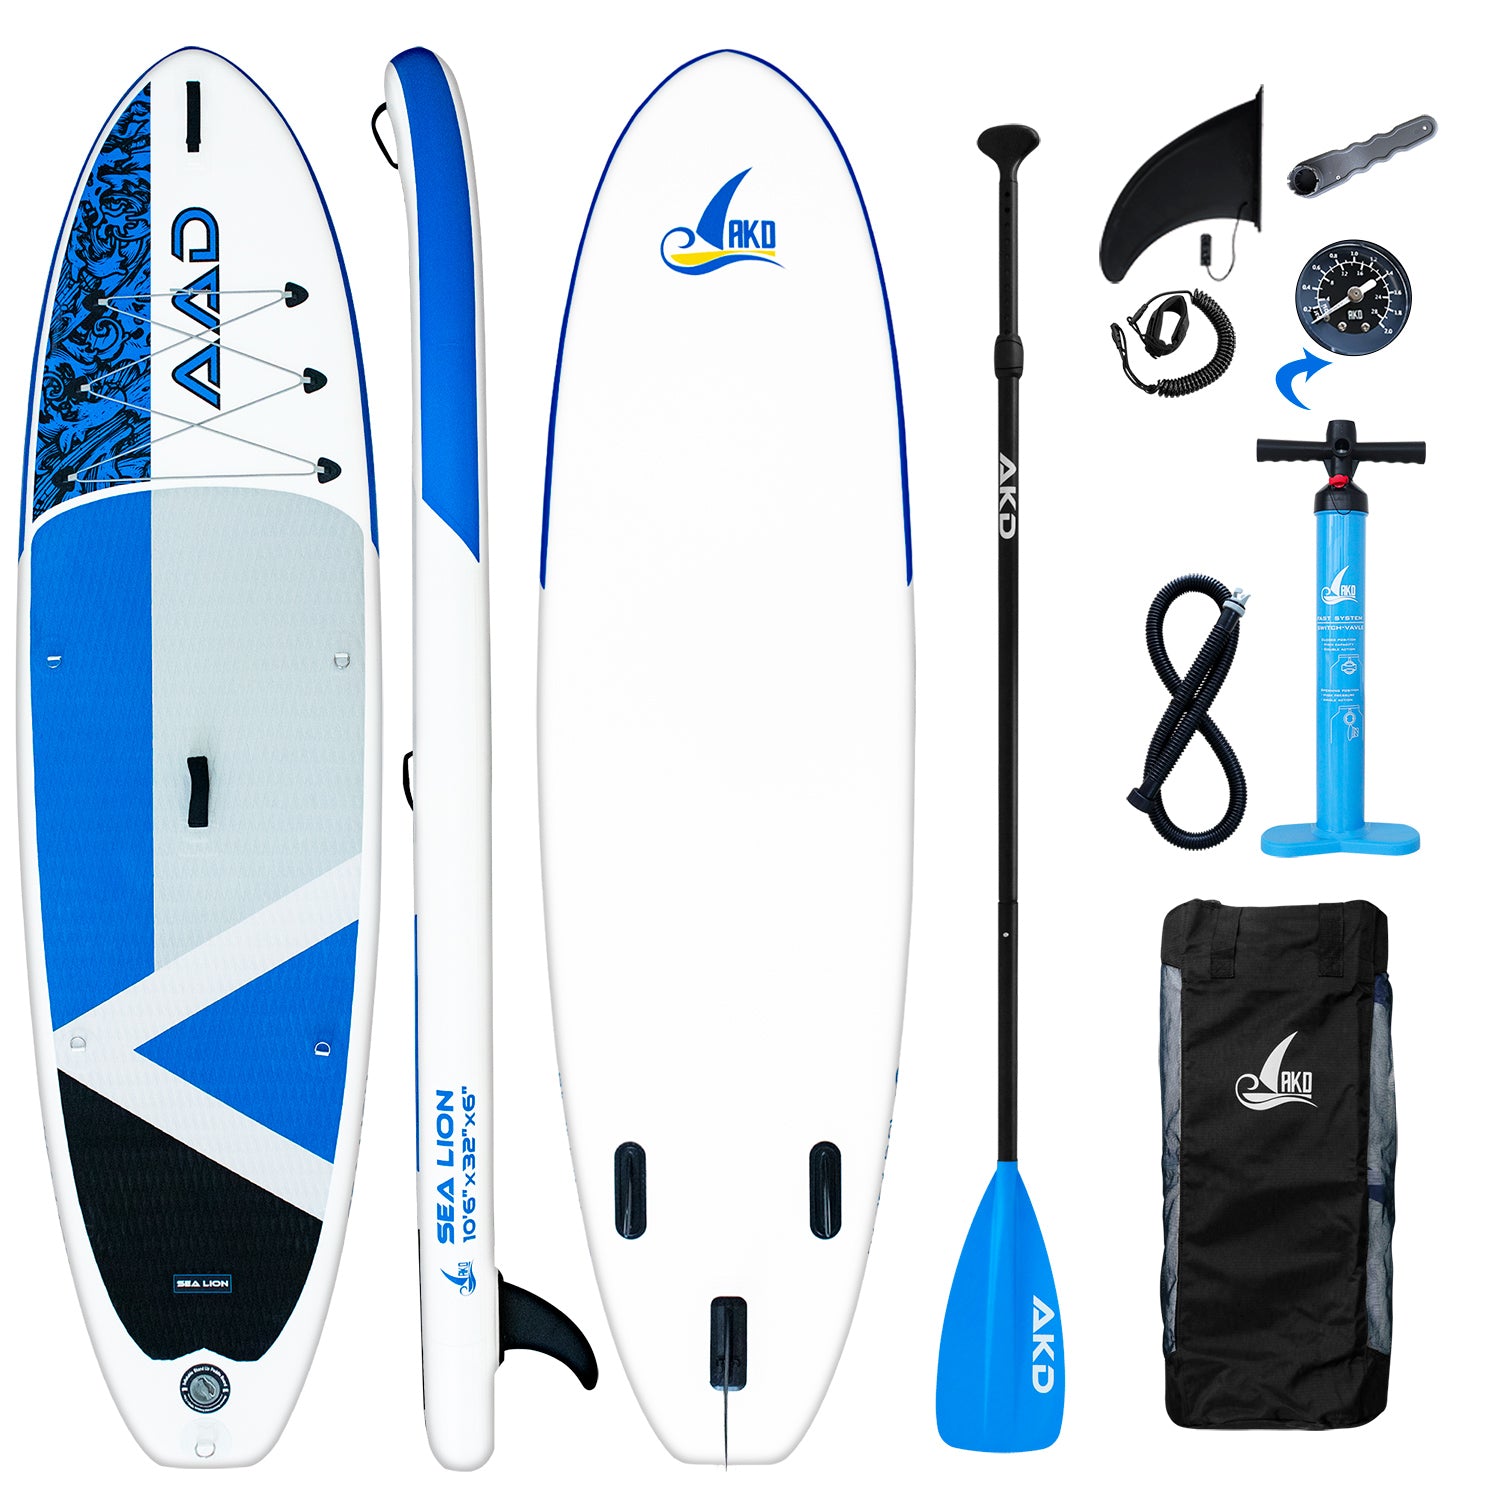 AKD SeaLion Stand Up Paddling Board 10'6" 320x81x15cm SUP Board 150kg/318L (Blau)